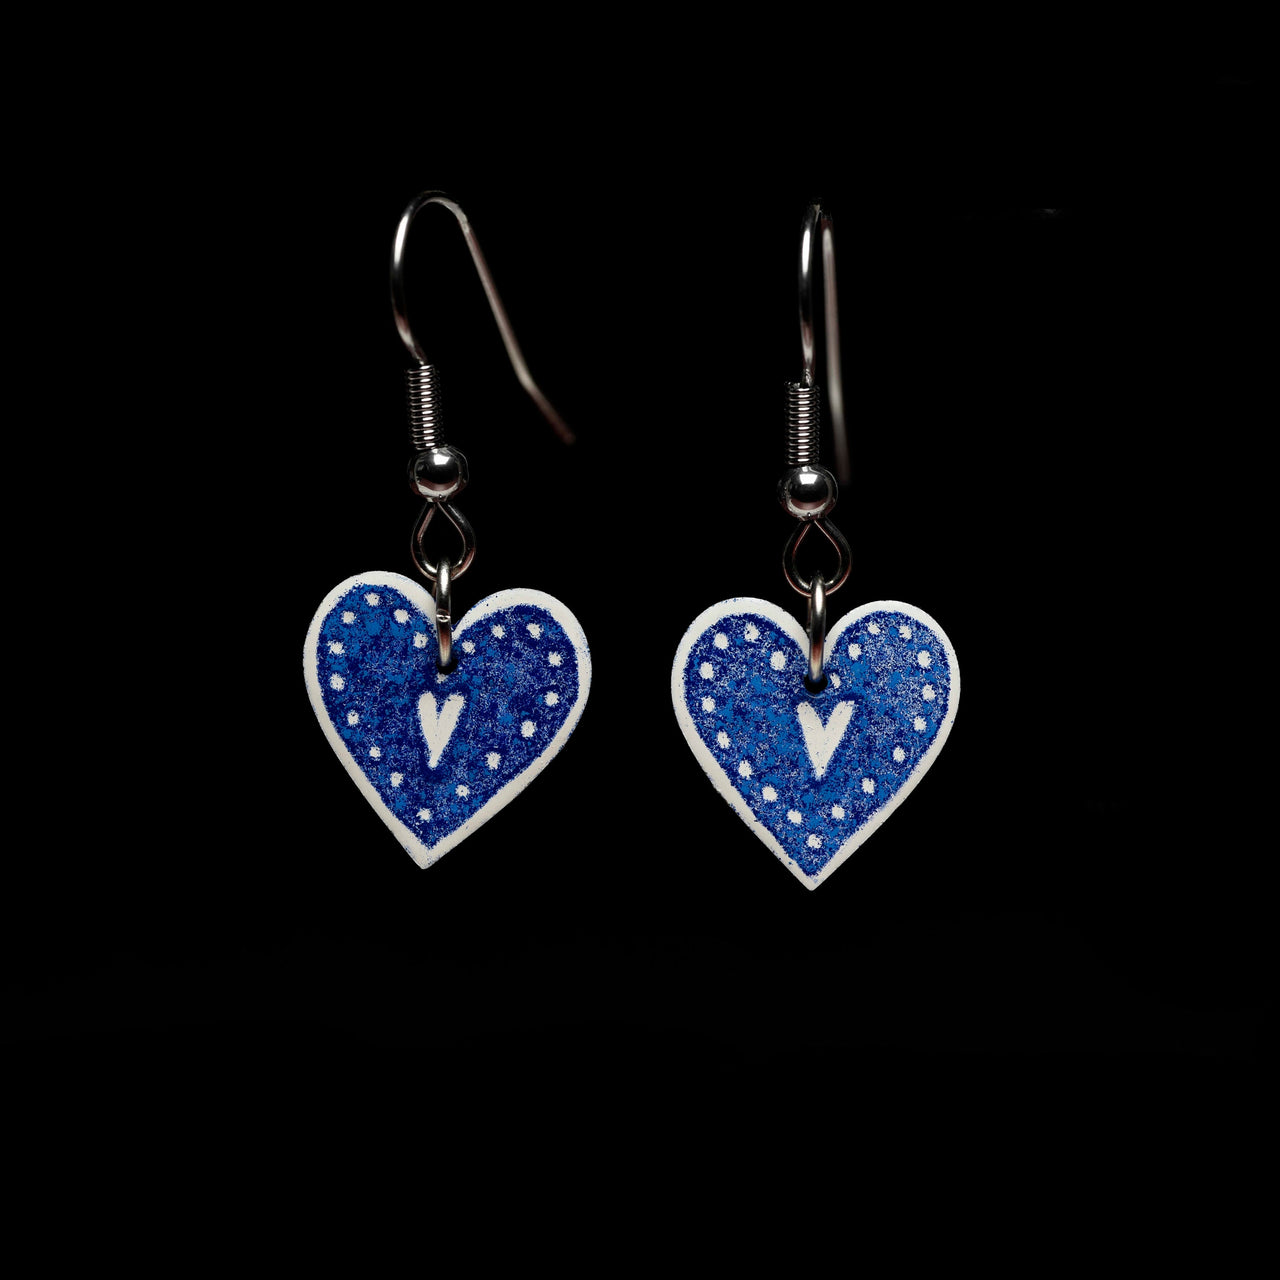 Heart Earrings with Polka Dots